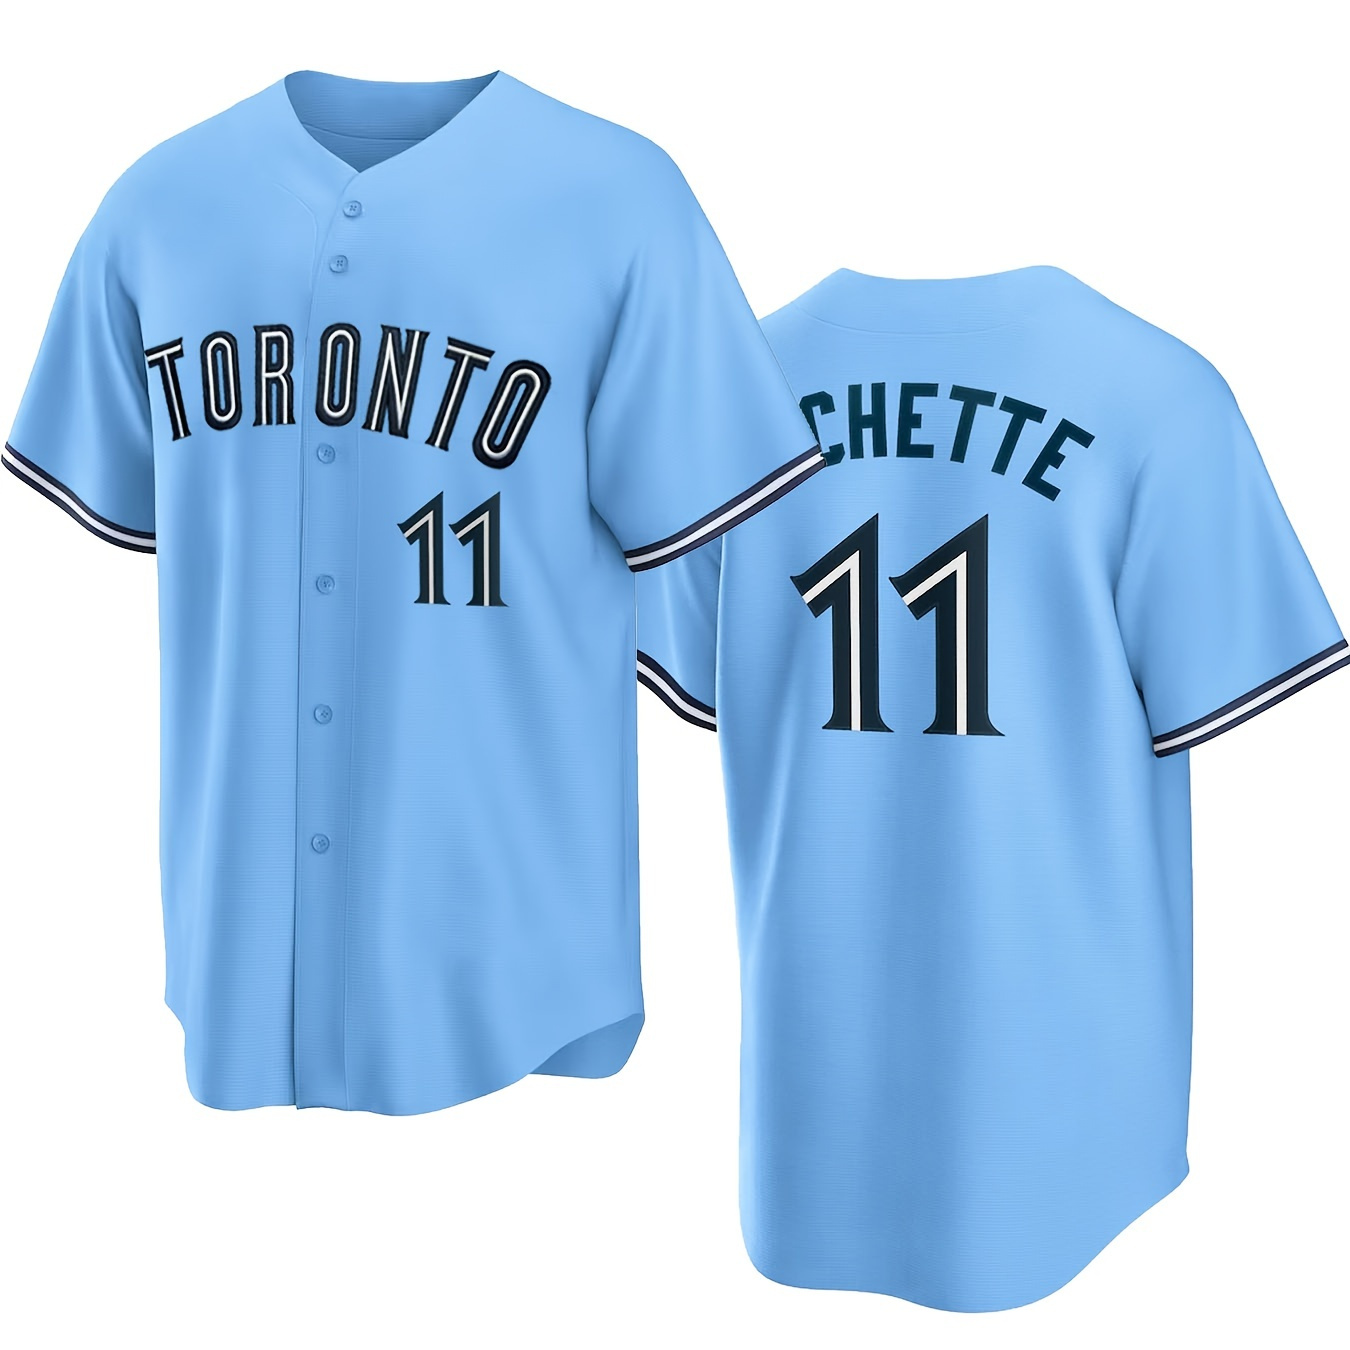 

Men's Toronto #11 Embroidered Street Short Sleeve V-neck Loose Button Up Shirt, Men's Summer Baseball Jersey, Gift For Men